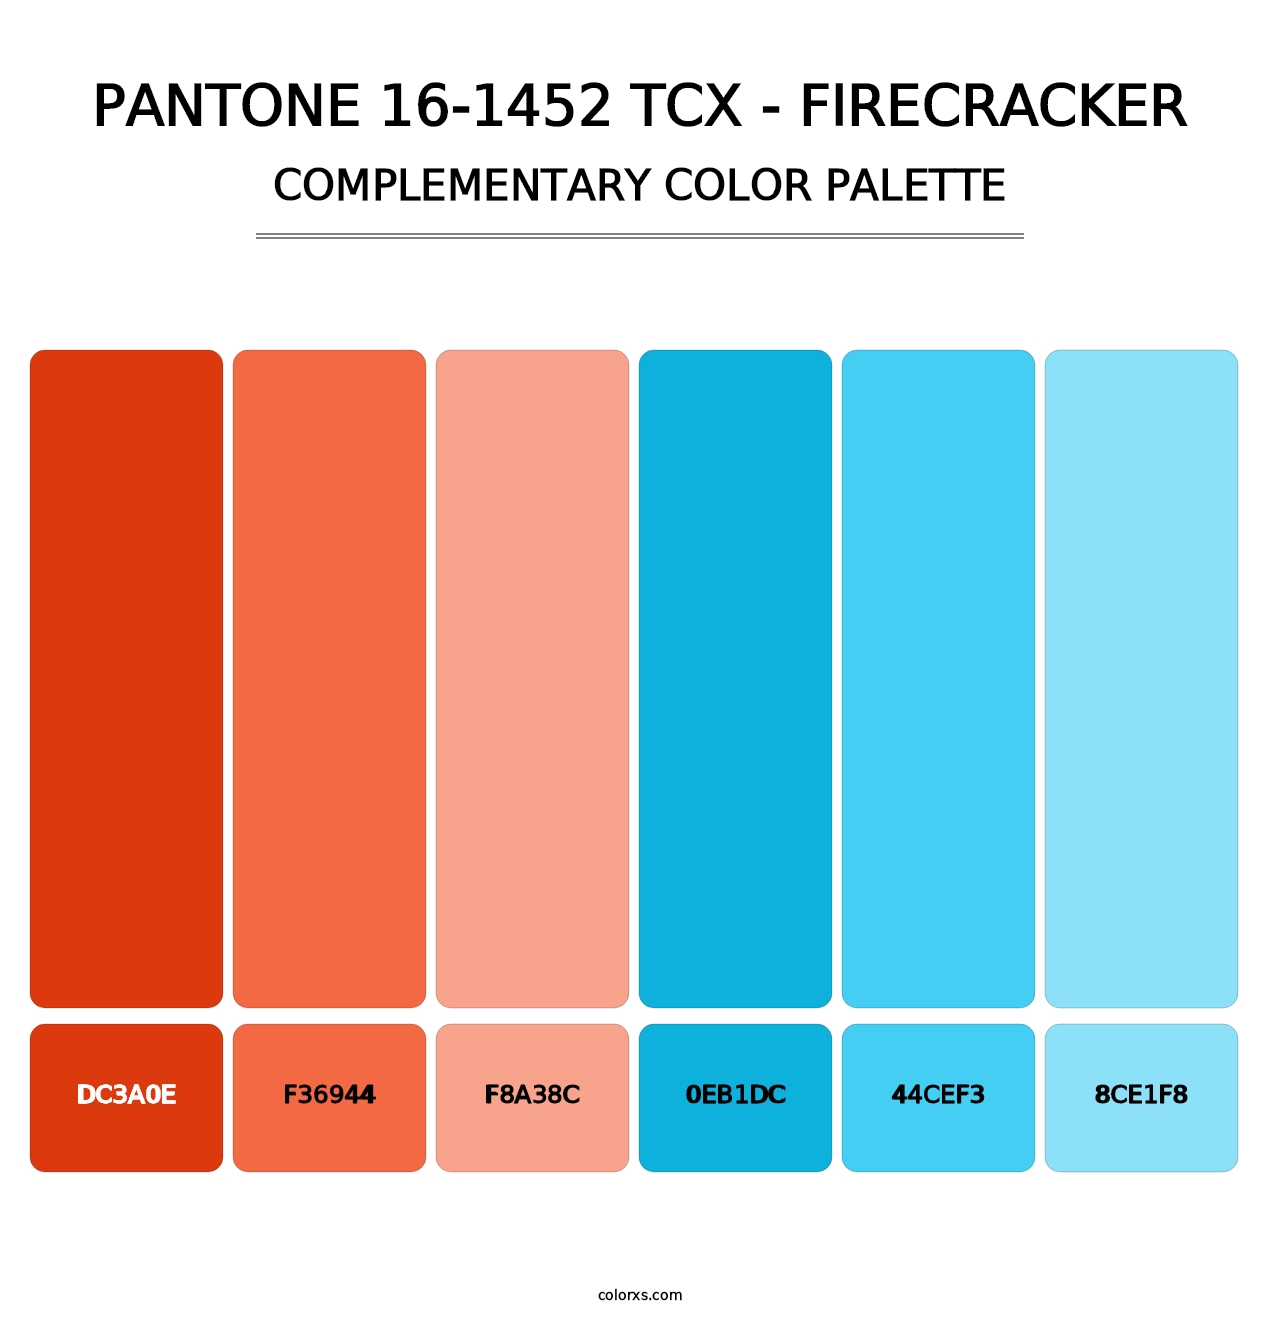 PANTONE 16-1452 TCX - Firecracker - Complementary Color Palette